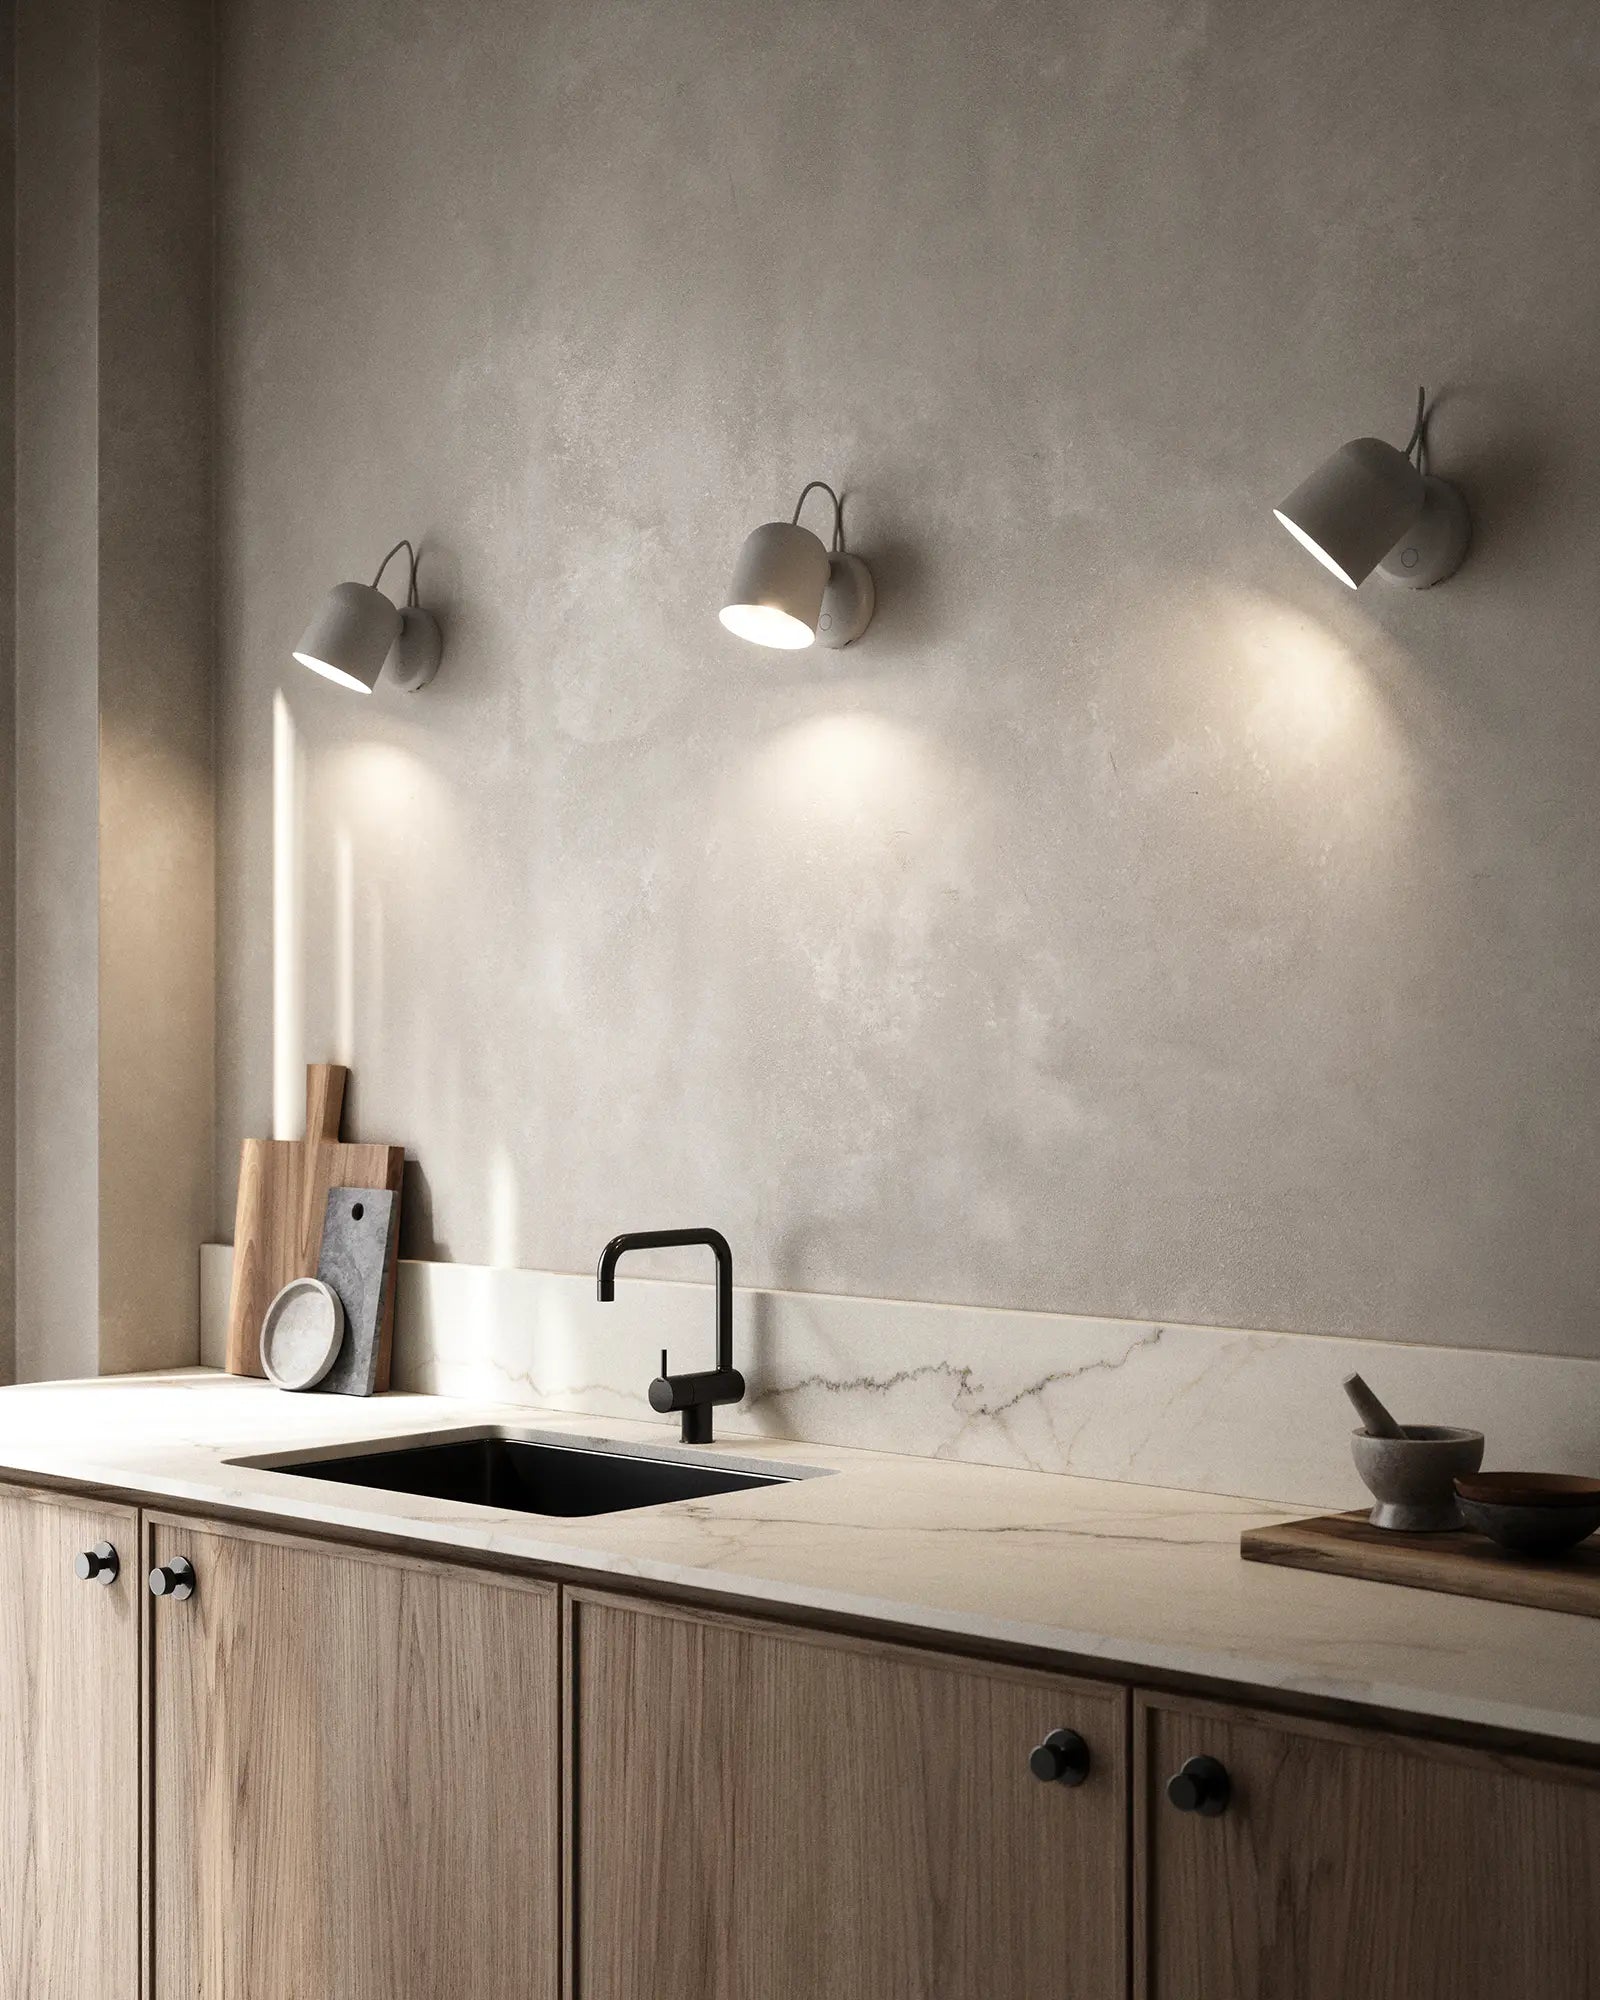 Angle adjustable Scandinavian wall light above a kitchen bench